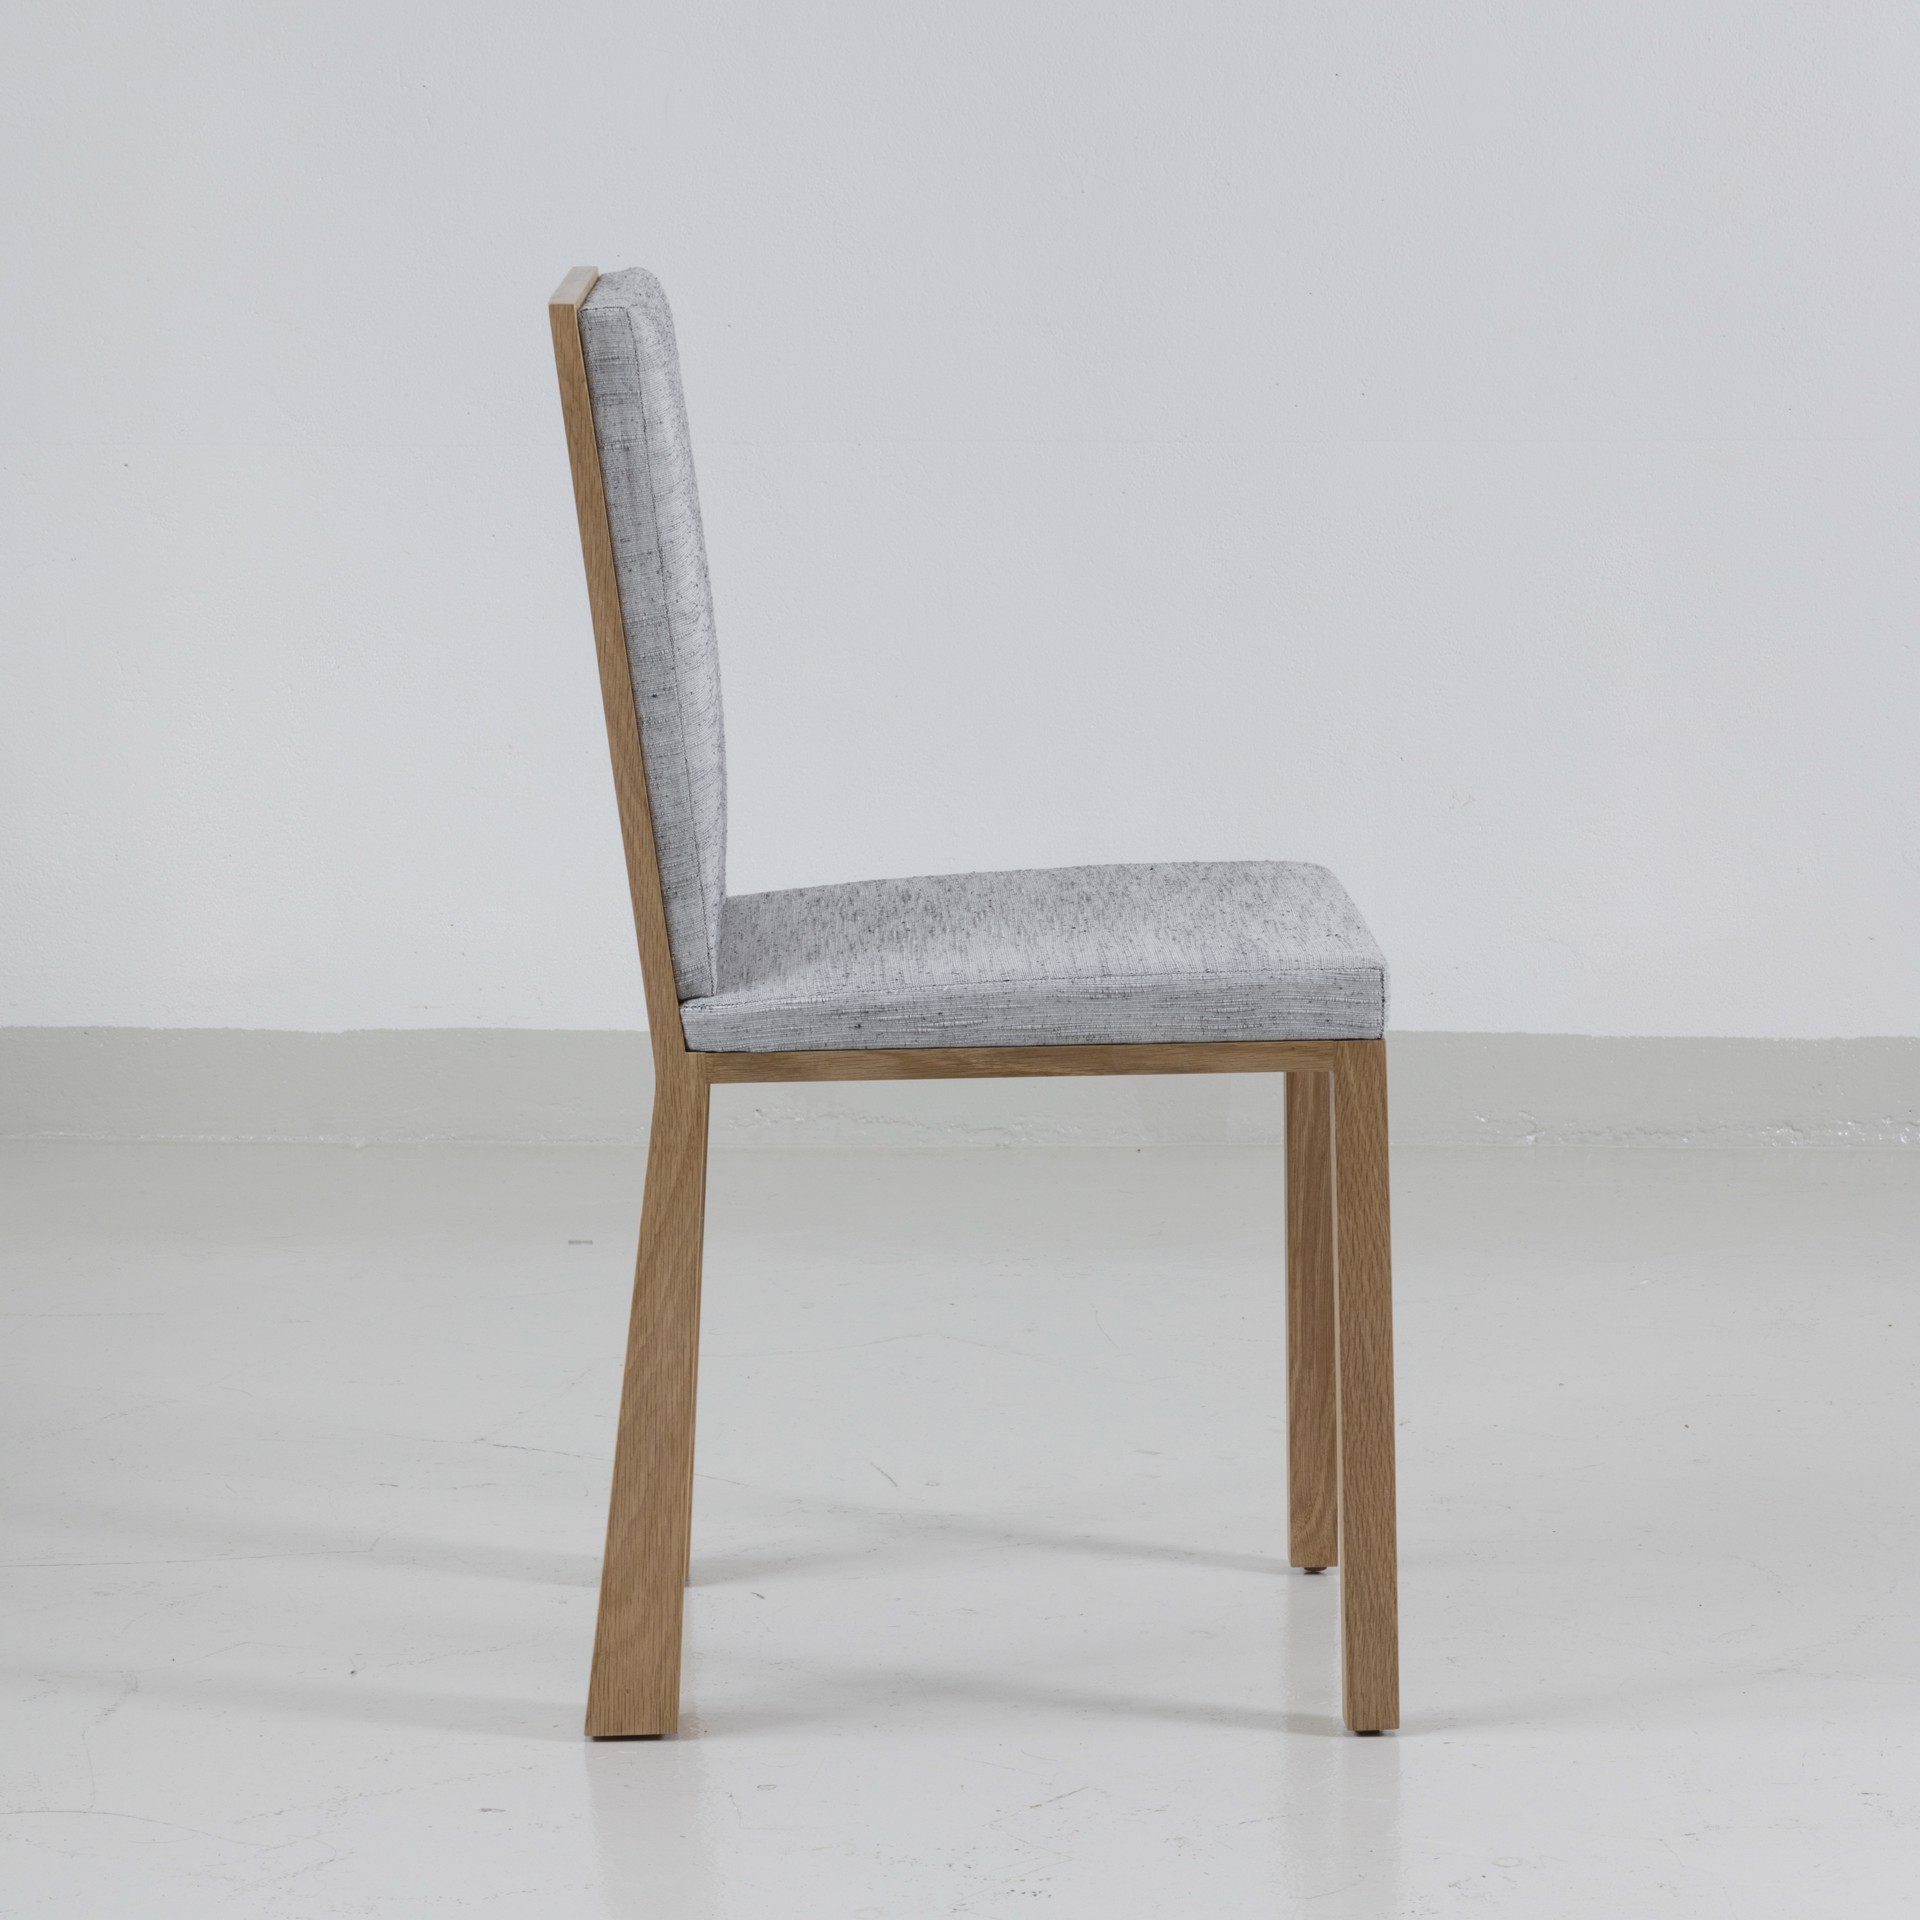 Chair #2 by Tinatin Kilaberidze